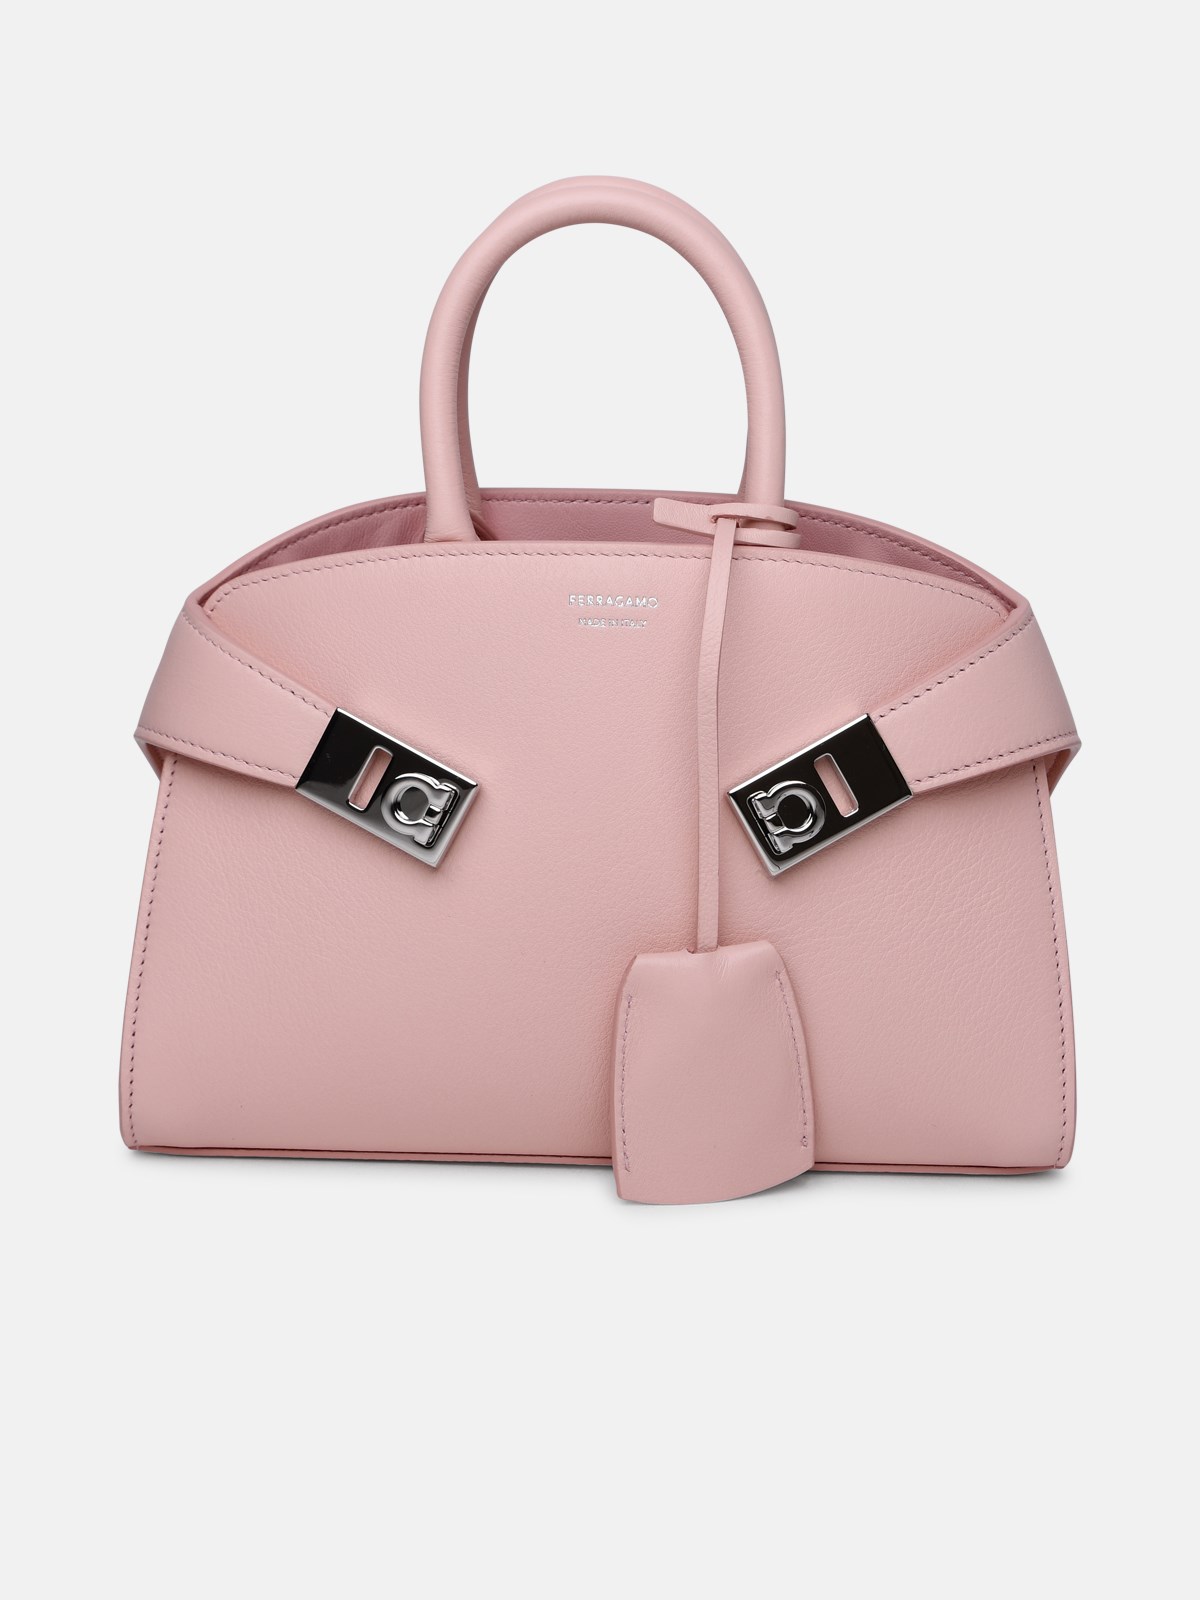 Ferragamo Pink Leather Bag